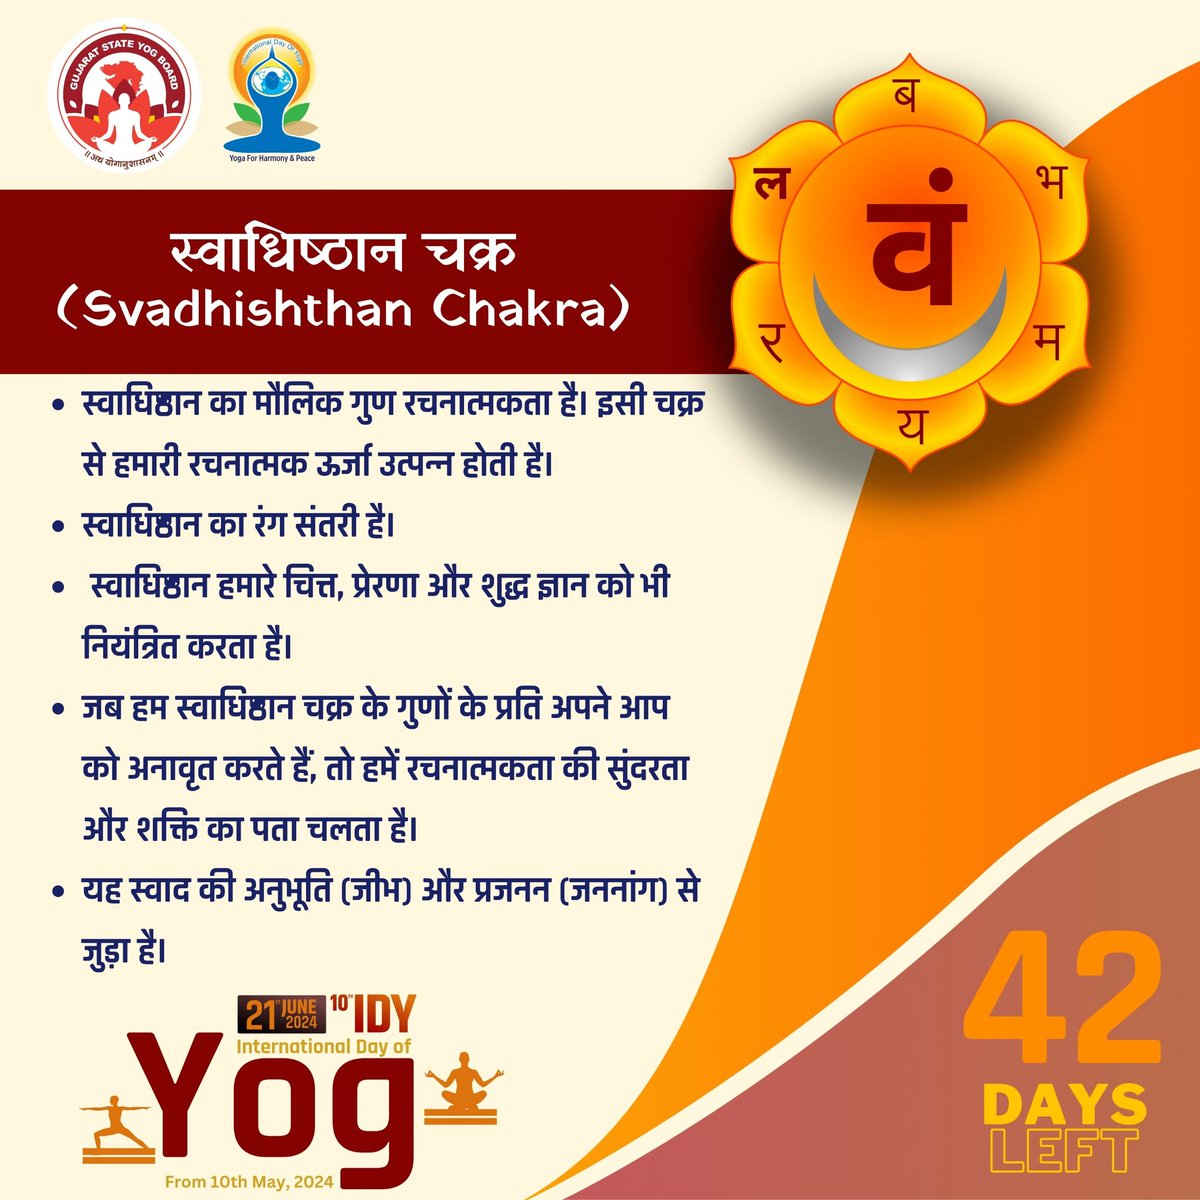 42 Days left to International Day of Yoga 2024

#GujaratStateYogBoard #YogmayGujarat #yogkaamrutkal #IDY2024